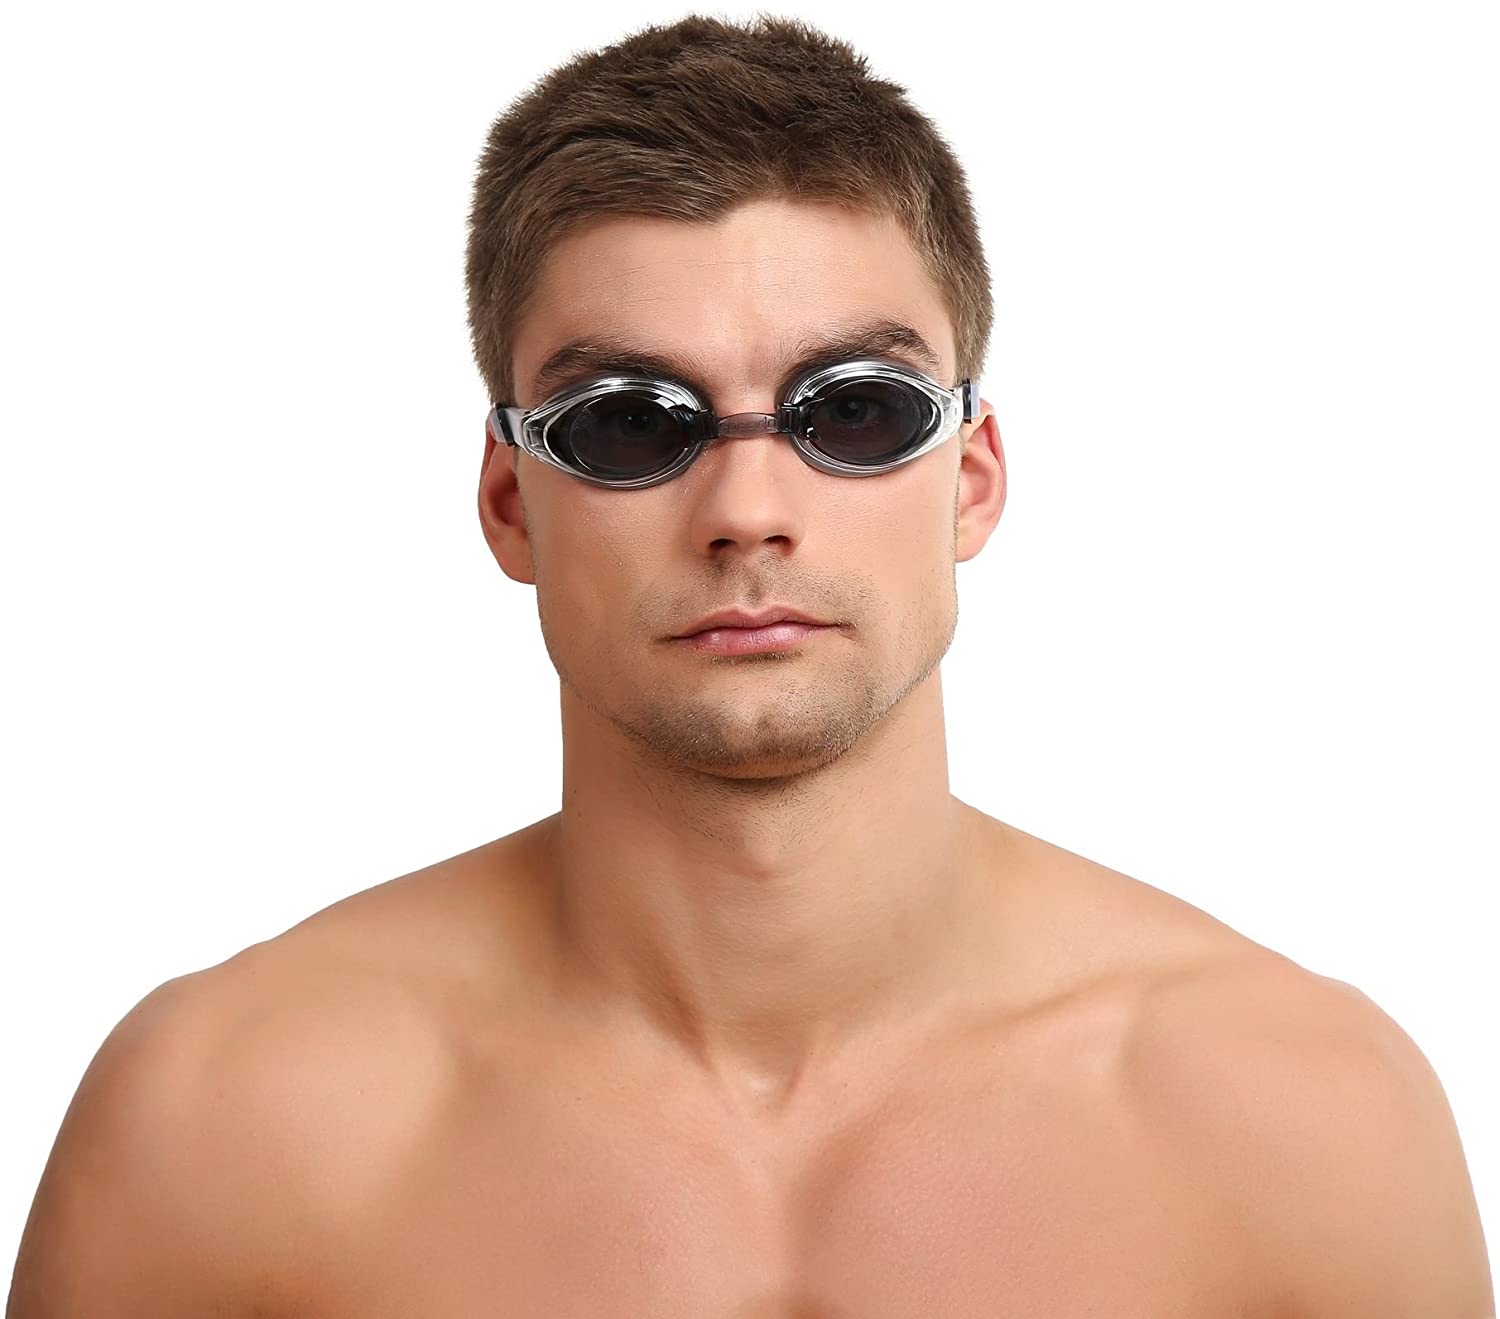 Speedo Unisex-Adult Rapid Goggles - Best Price online Prokicksports.com